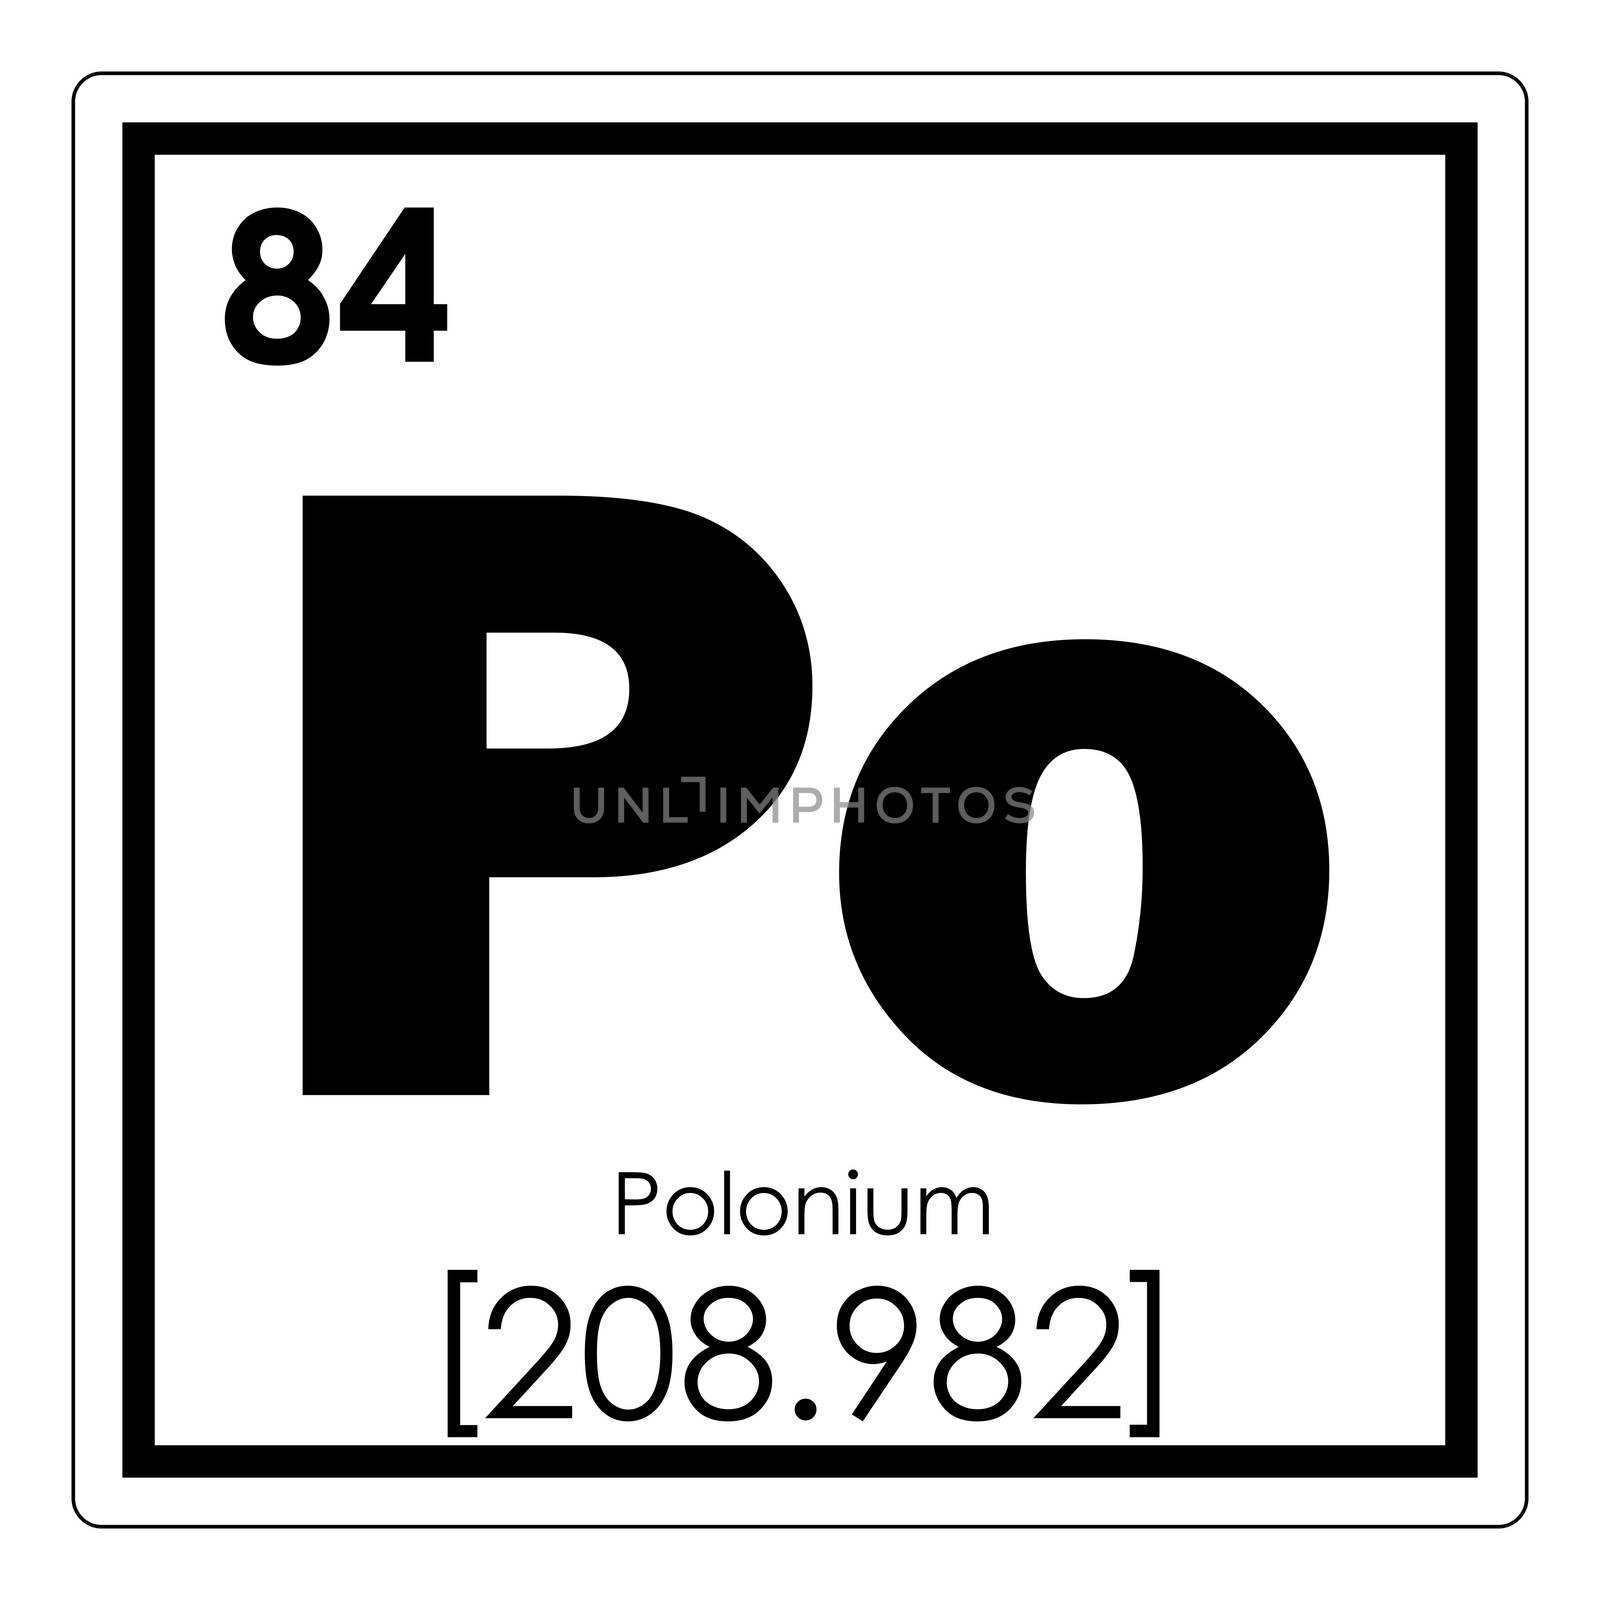 Polonium chemical element by tony4urban